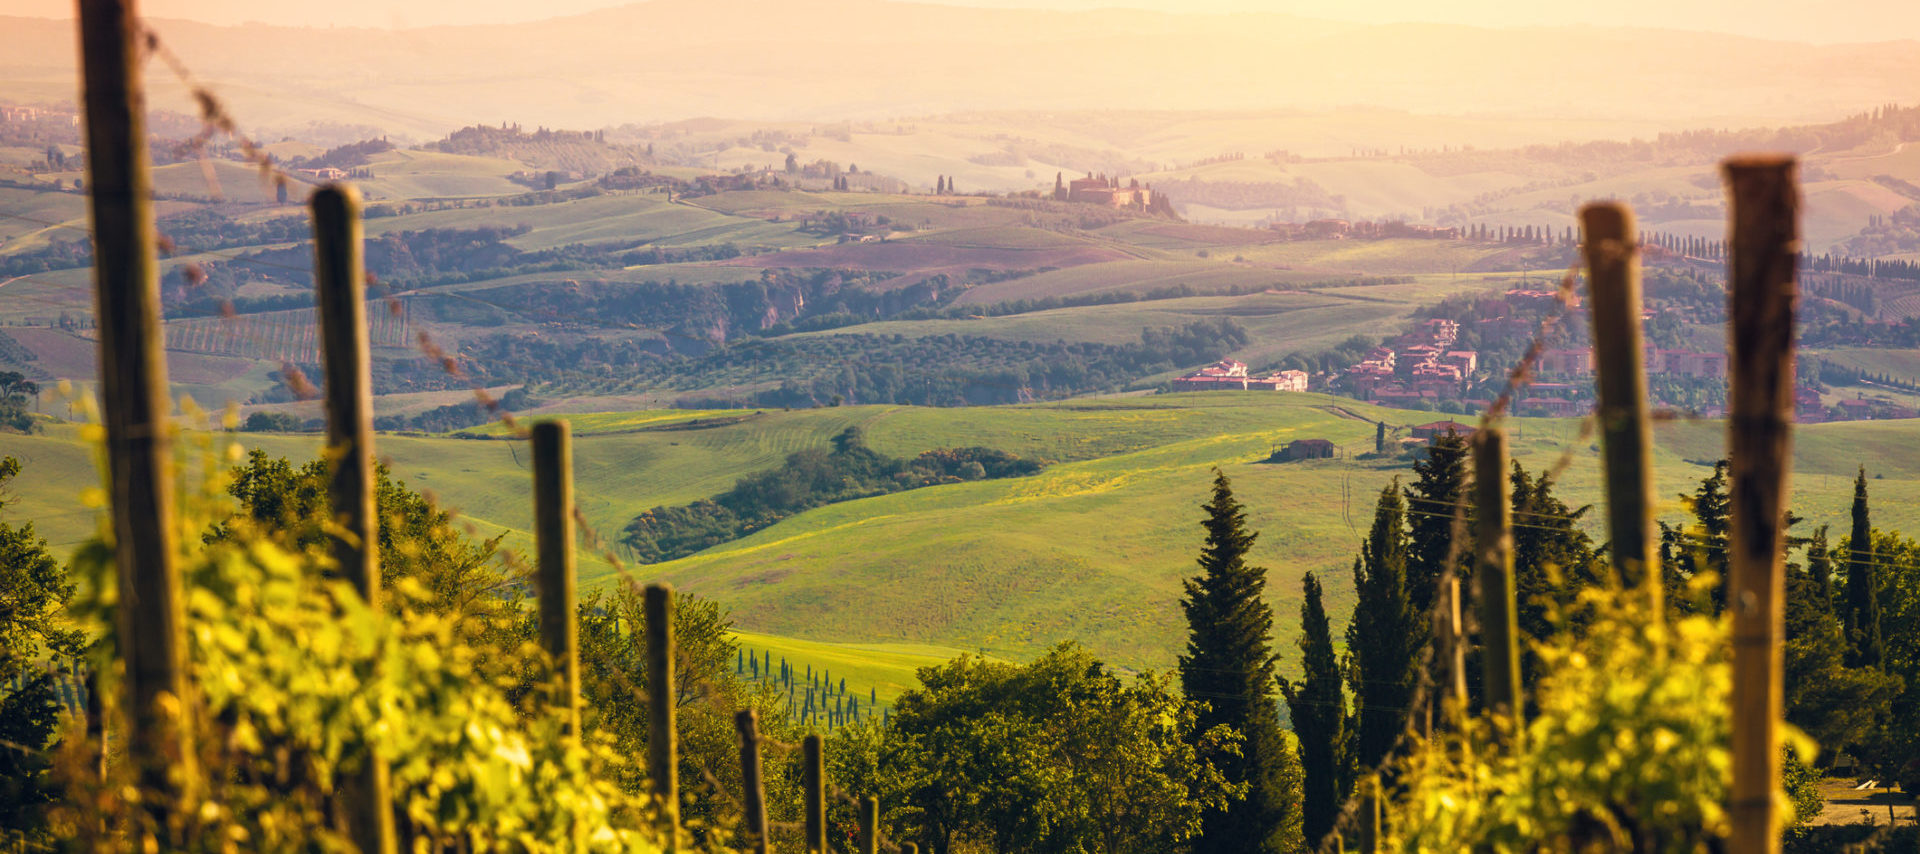 Vineyards in Tuscany at sunset, Chianti region.